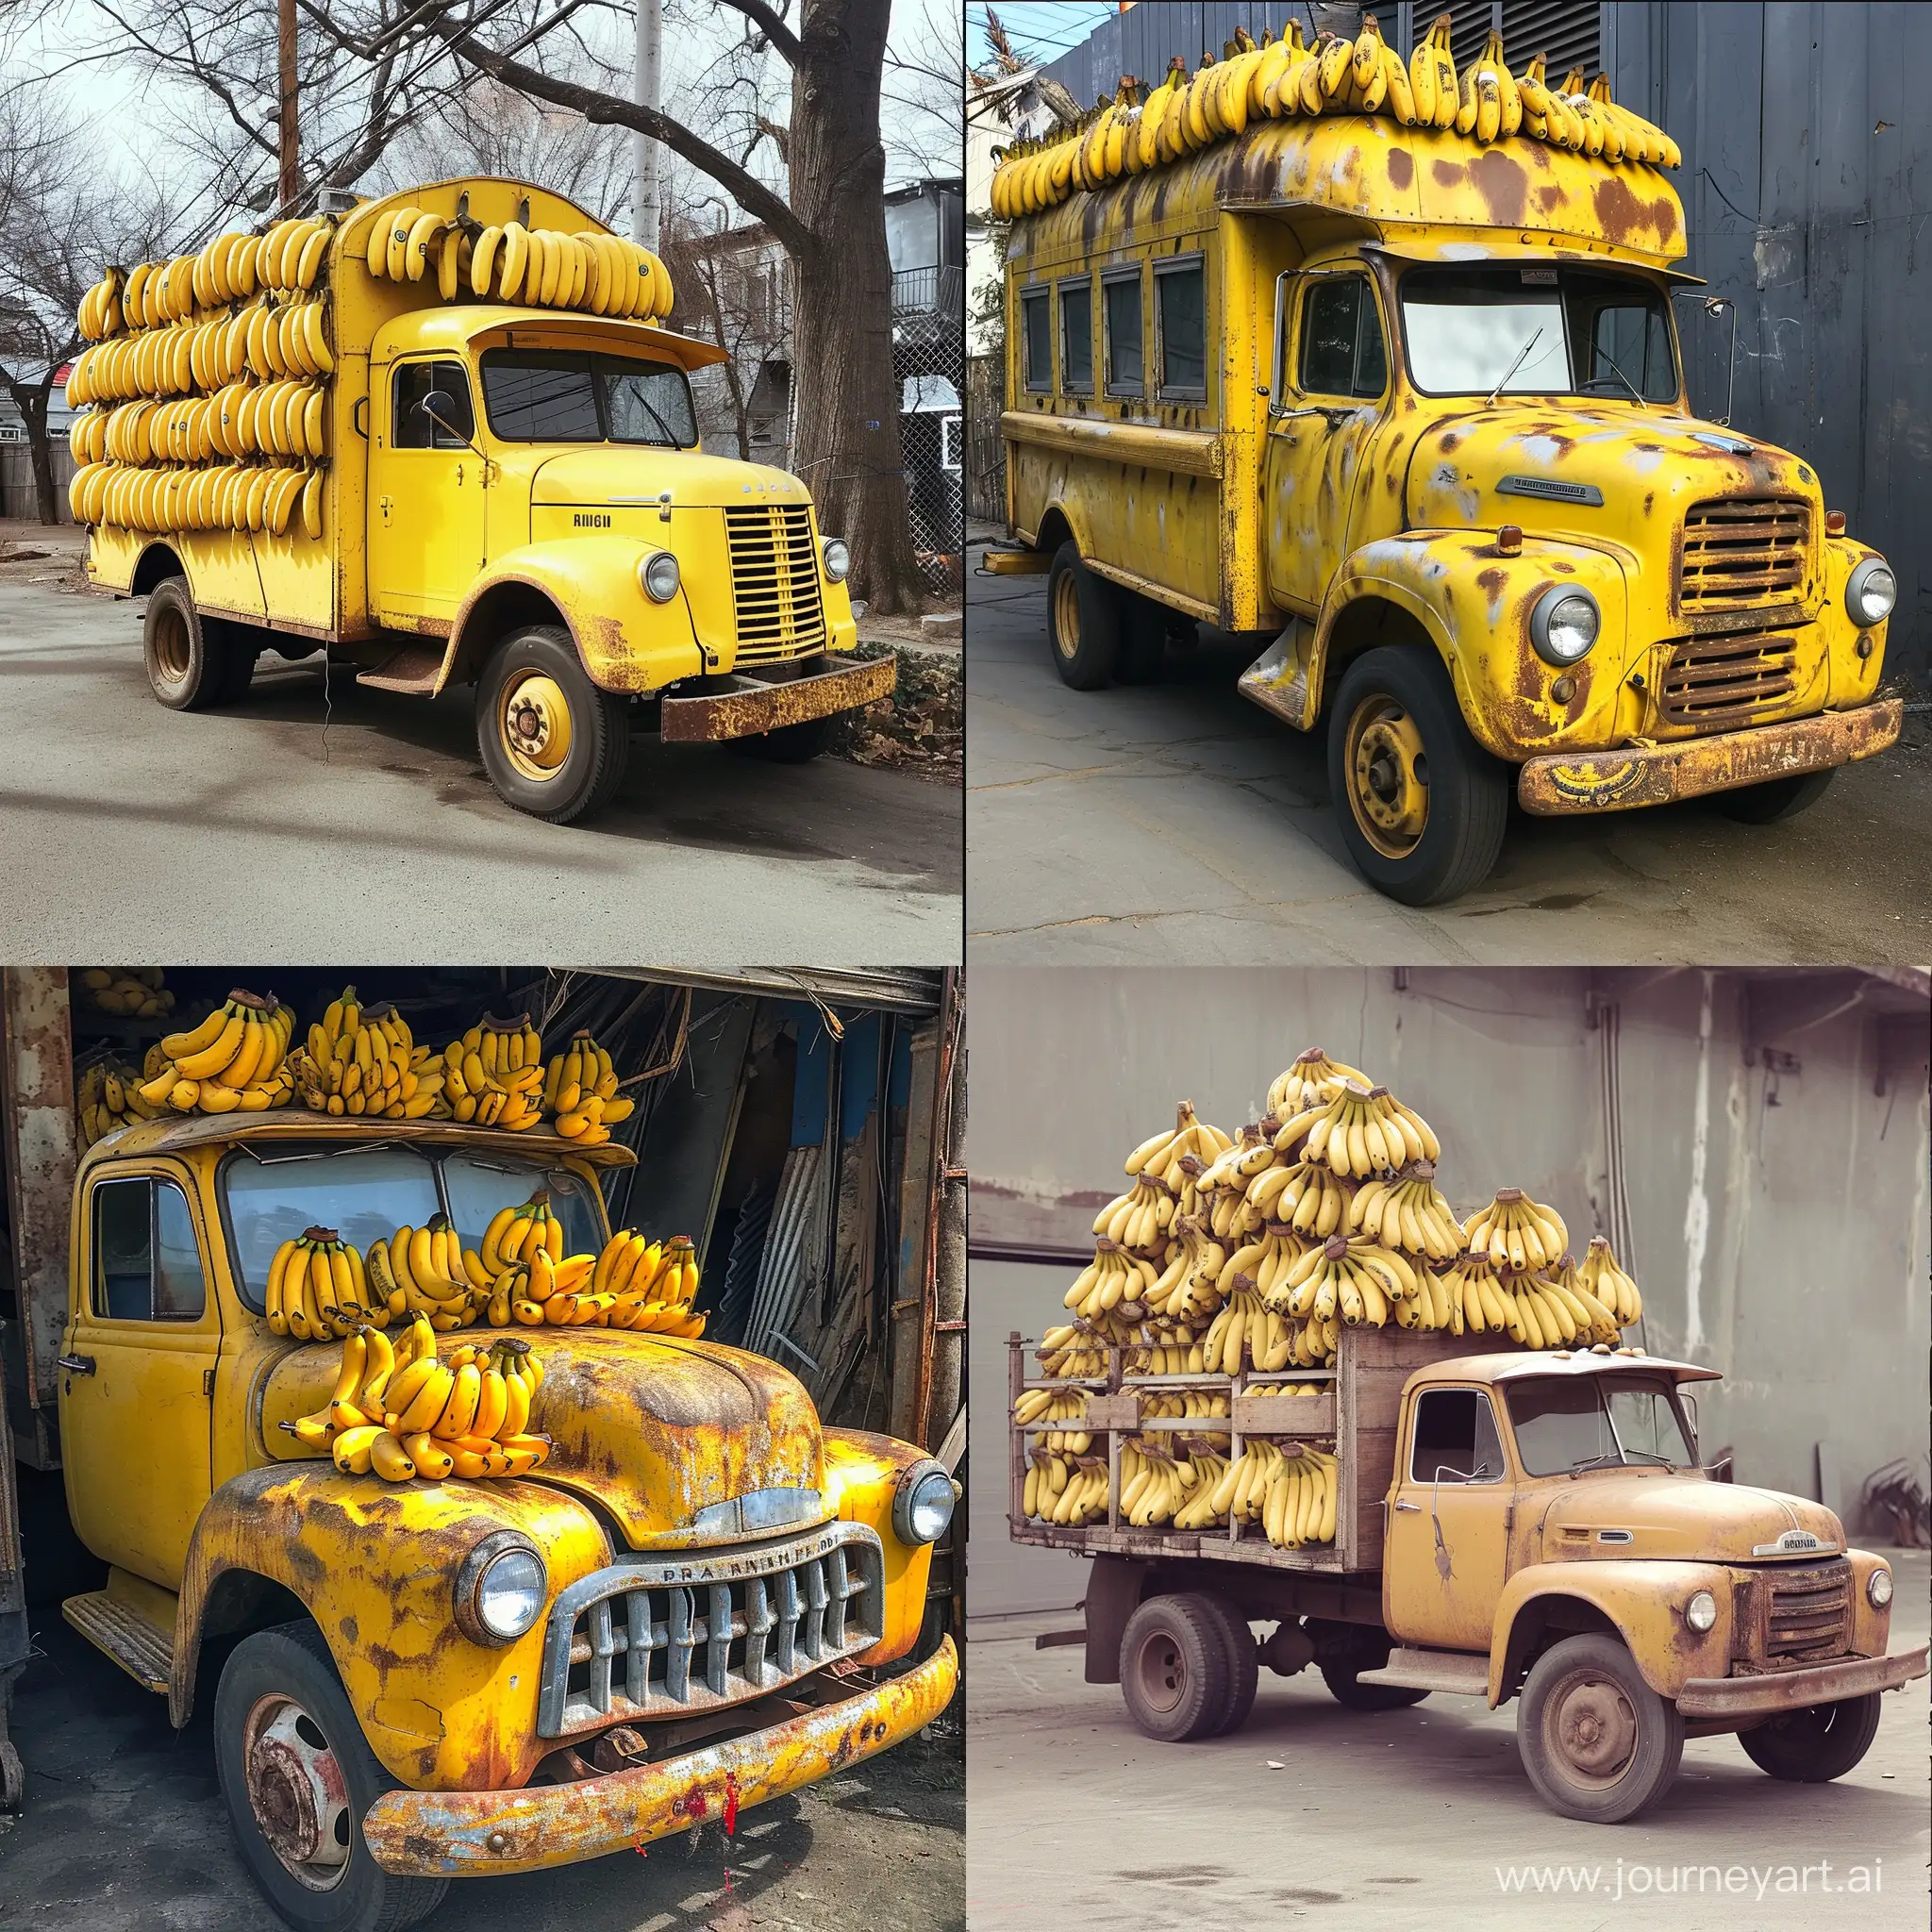 Vibrant-Banana-Truck-Delivery-62265